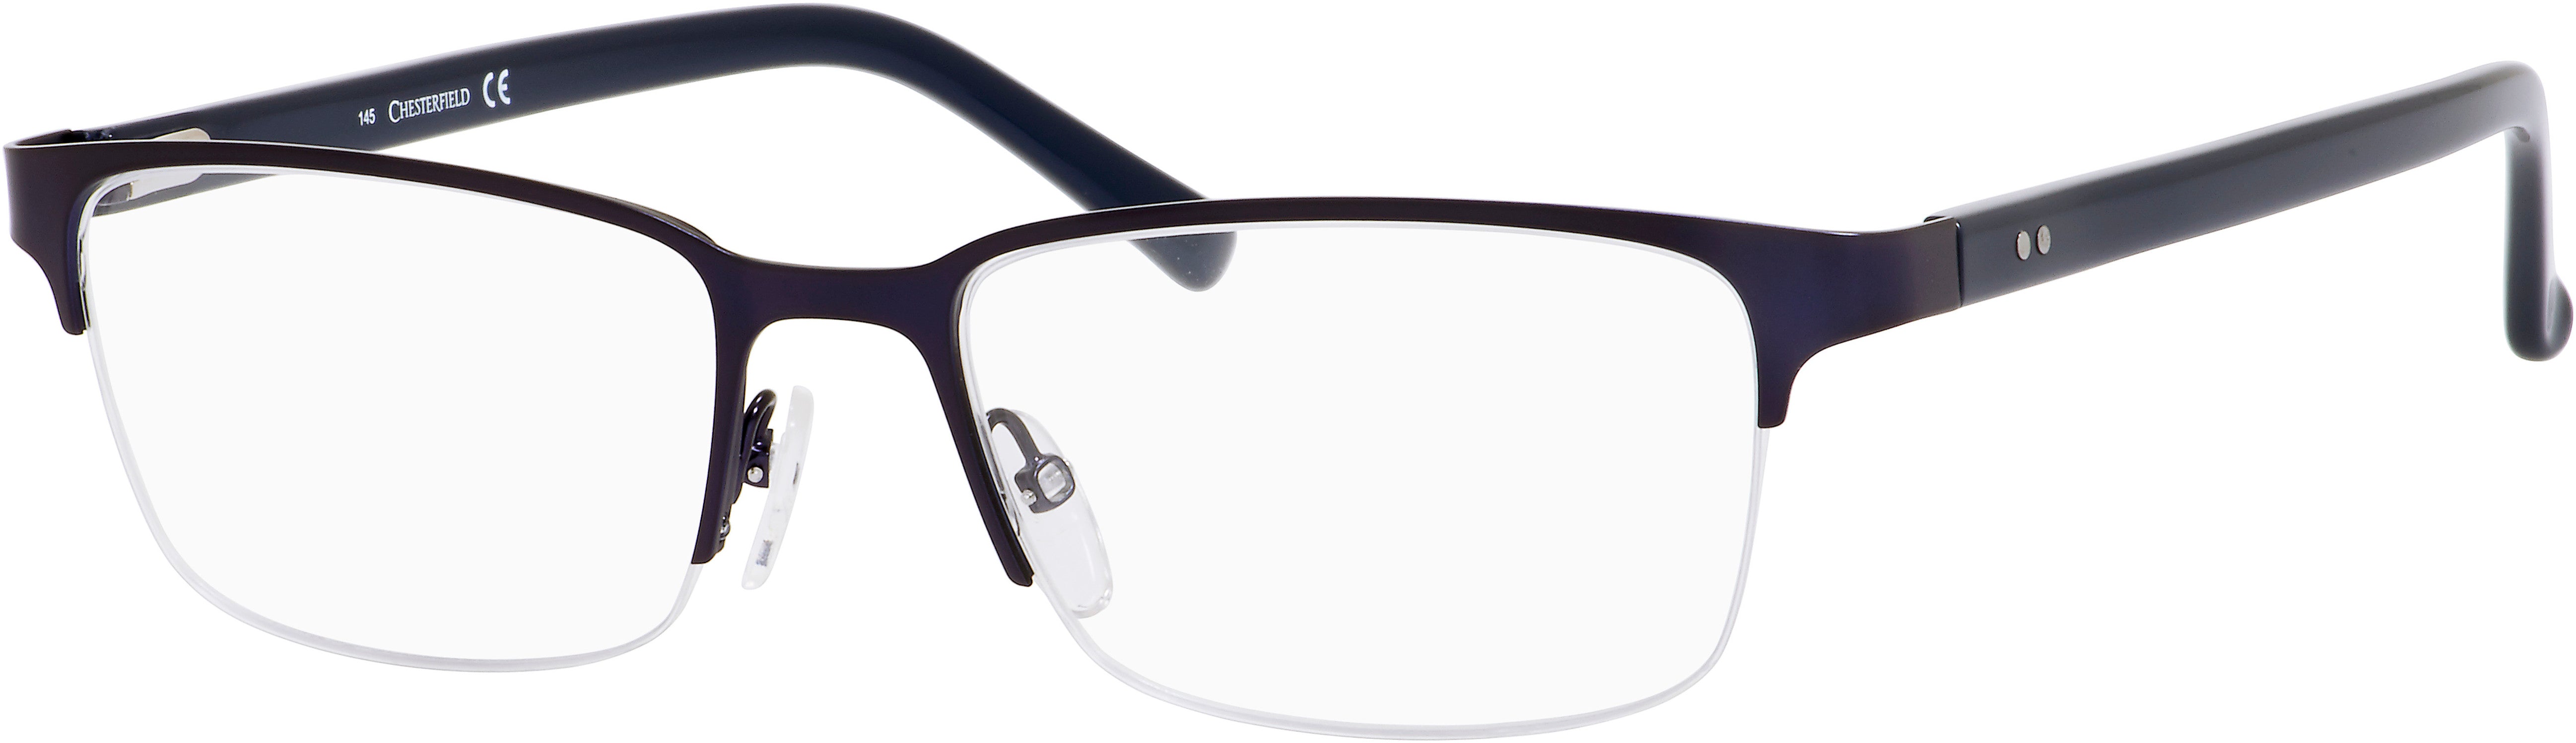  Chesterfield 29 XL Rectangular Eyeglasses 01P6-01P6  Navy (00 Demo Lens)